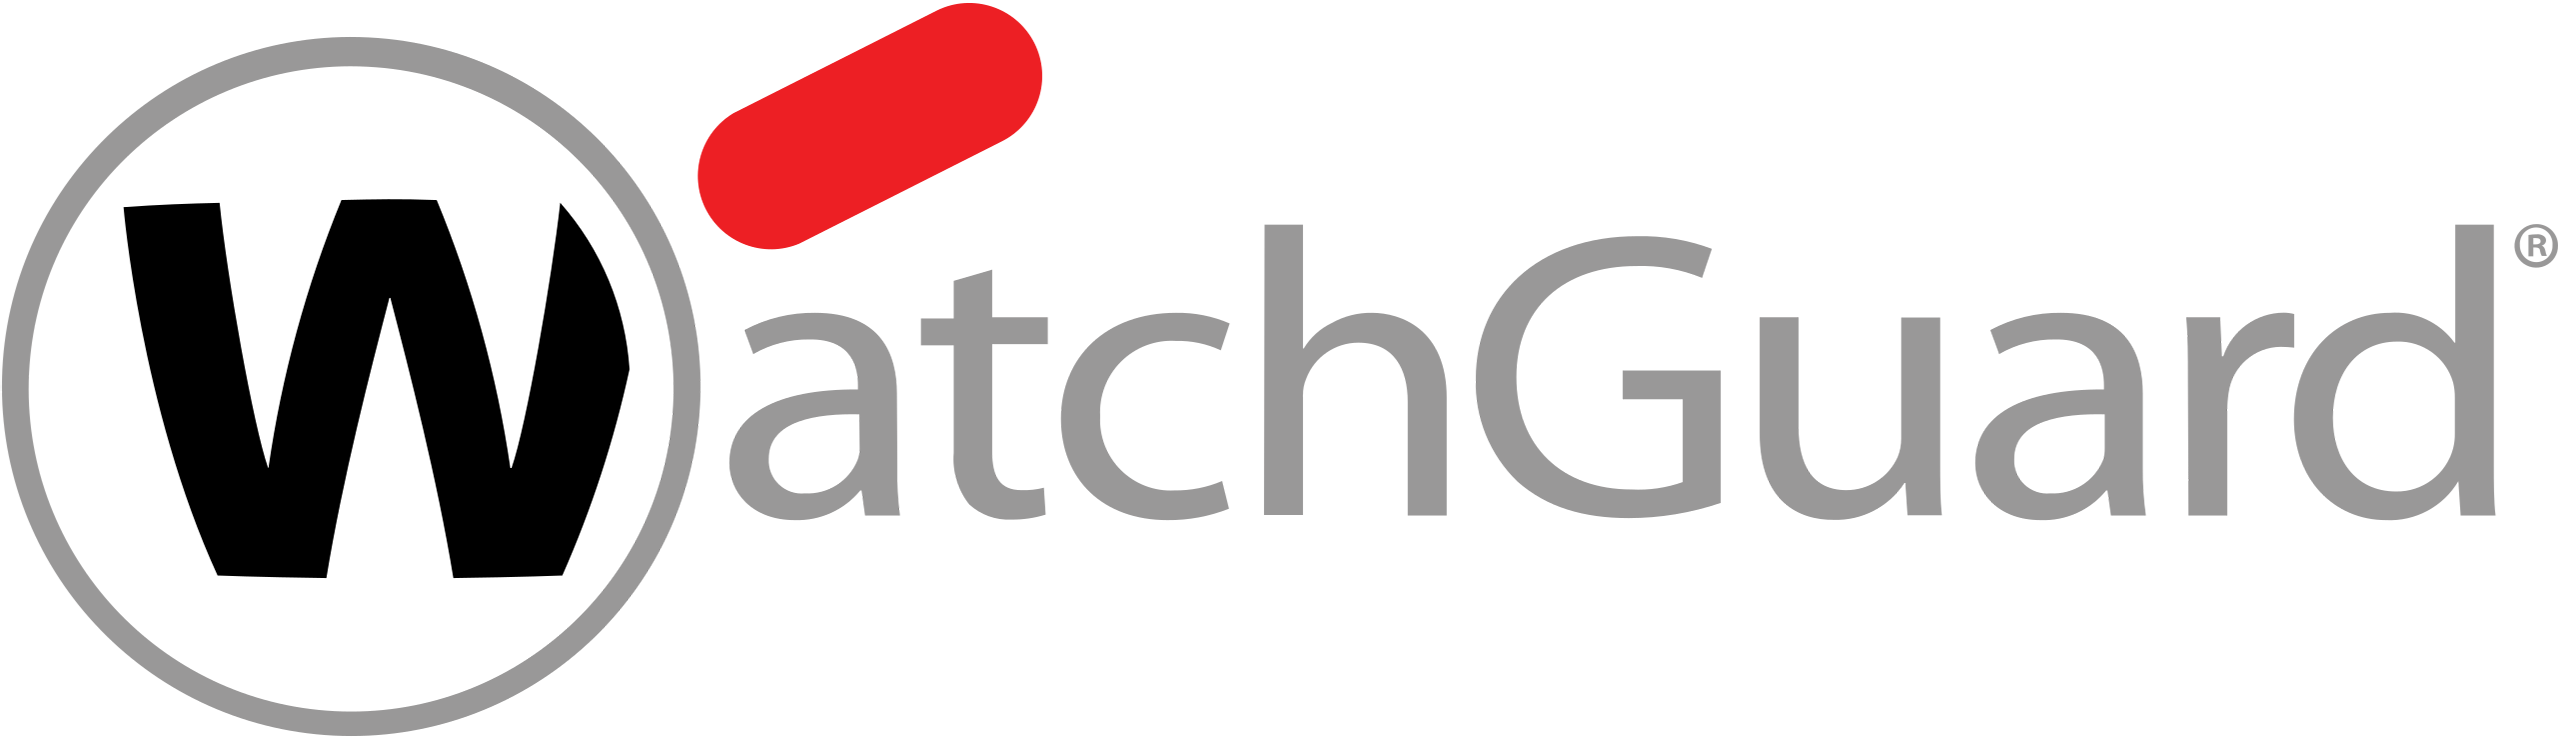 1 logo watchguard